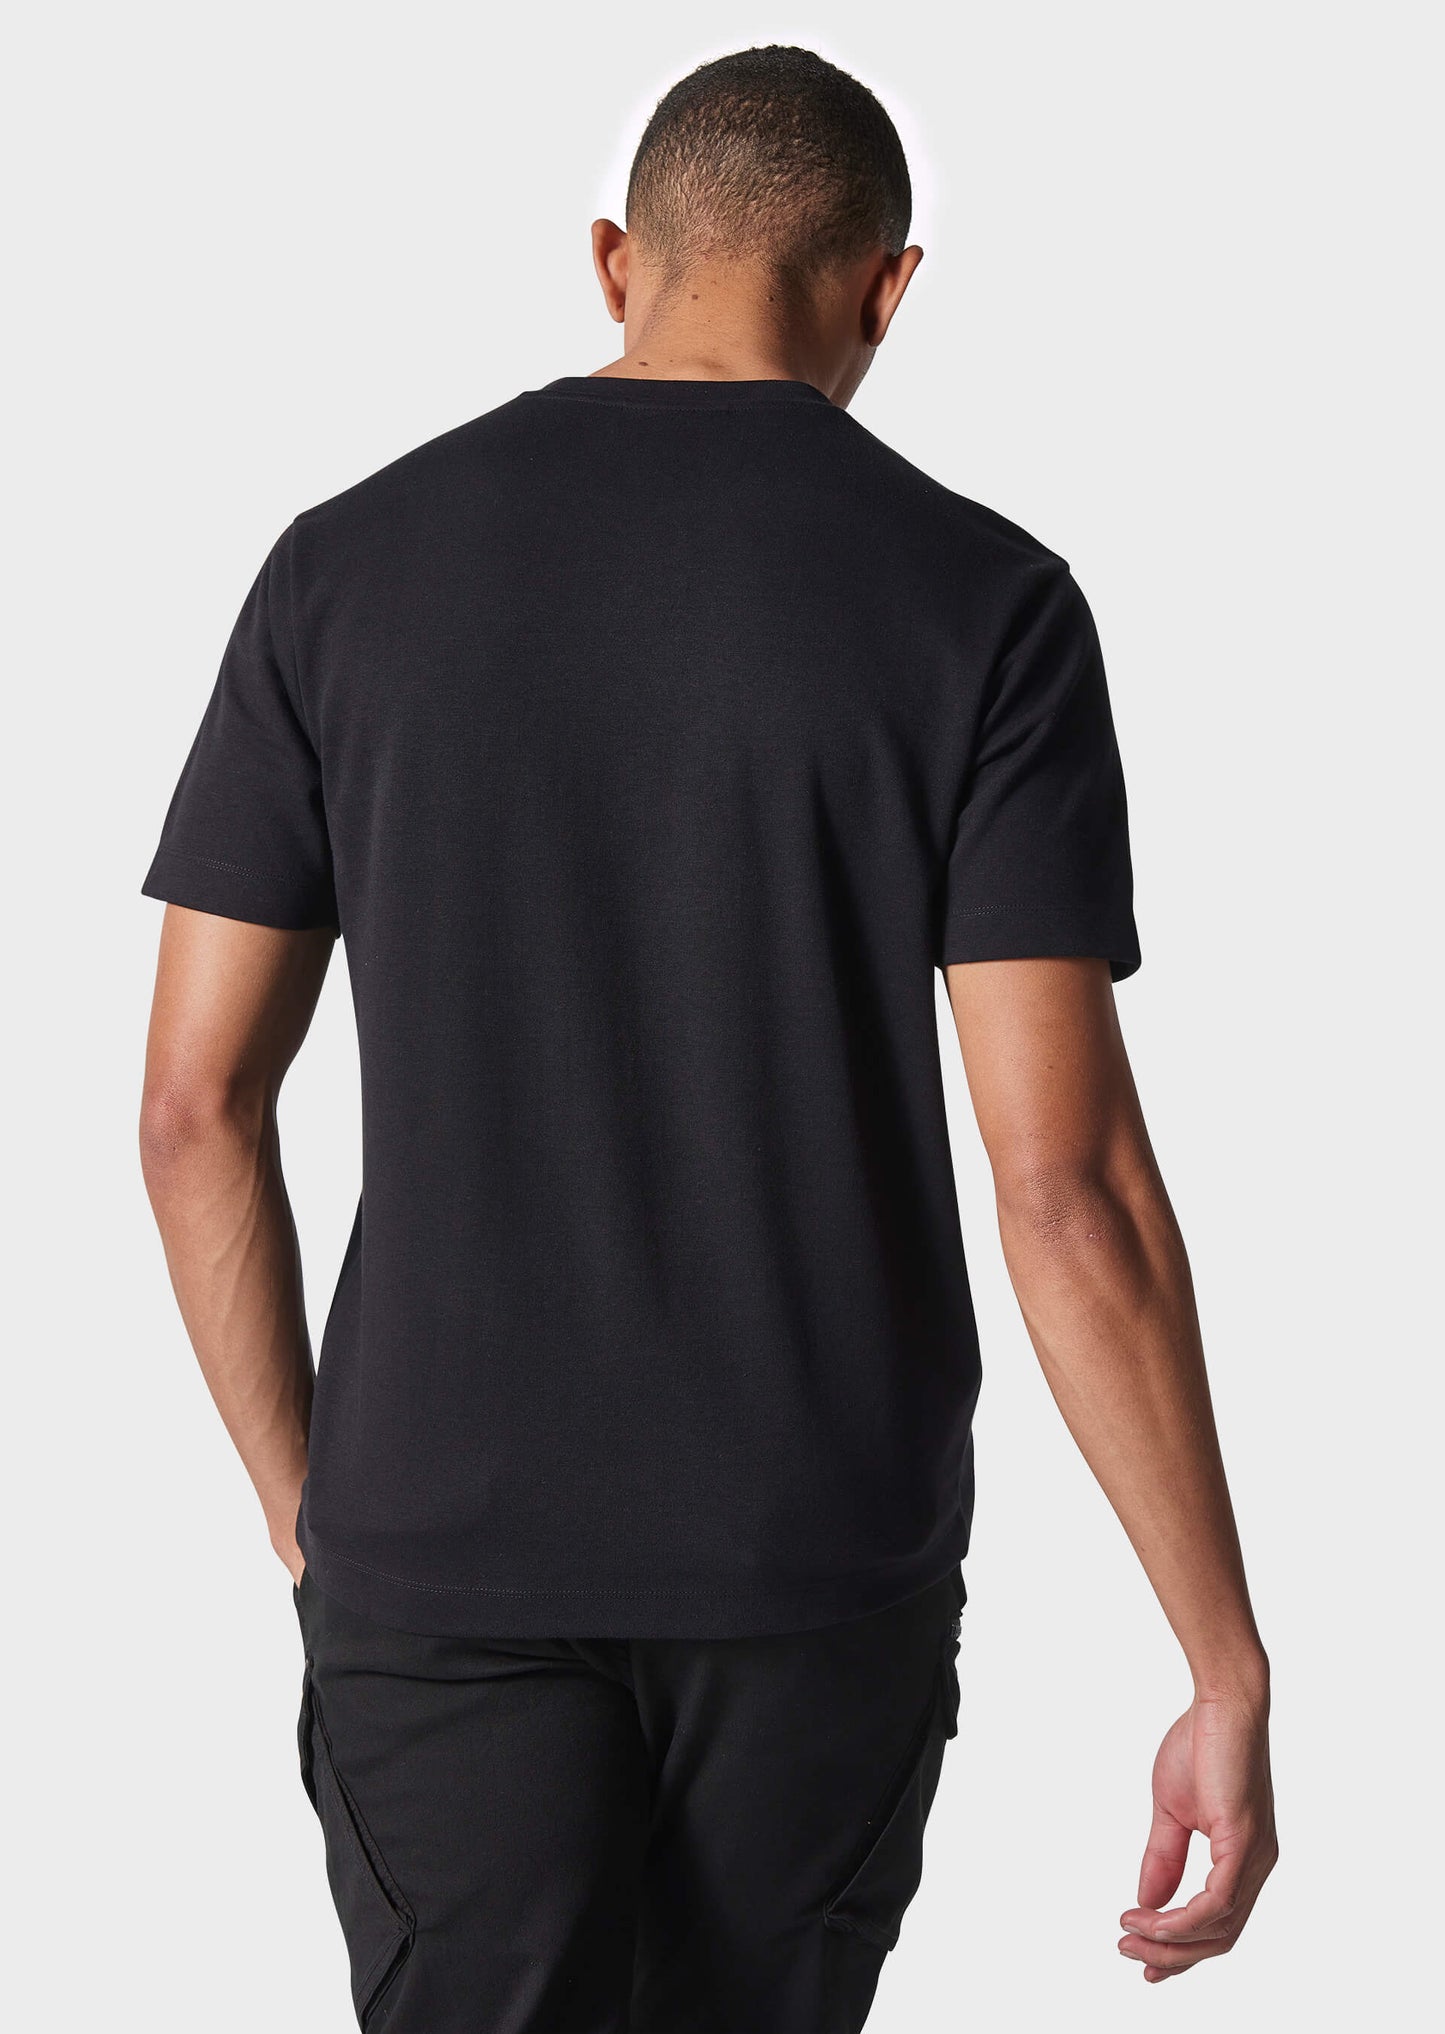 Sheridan Black T-Shirt